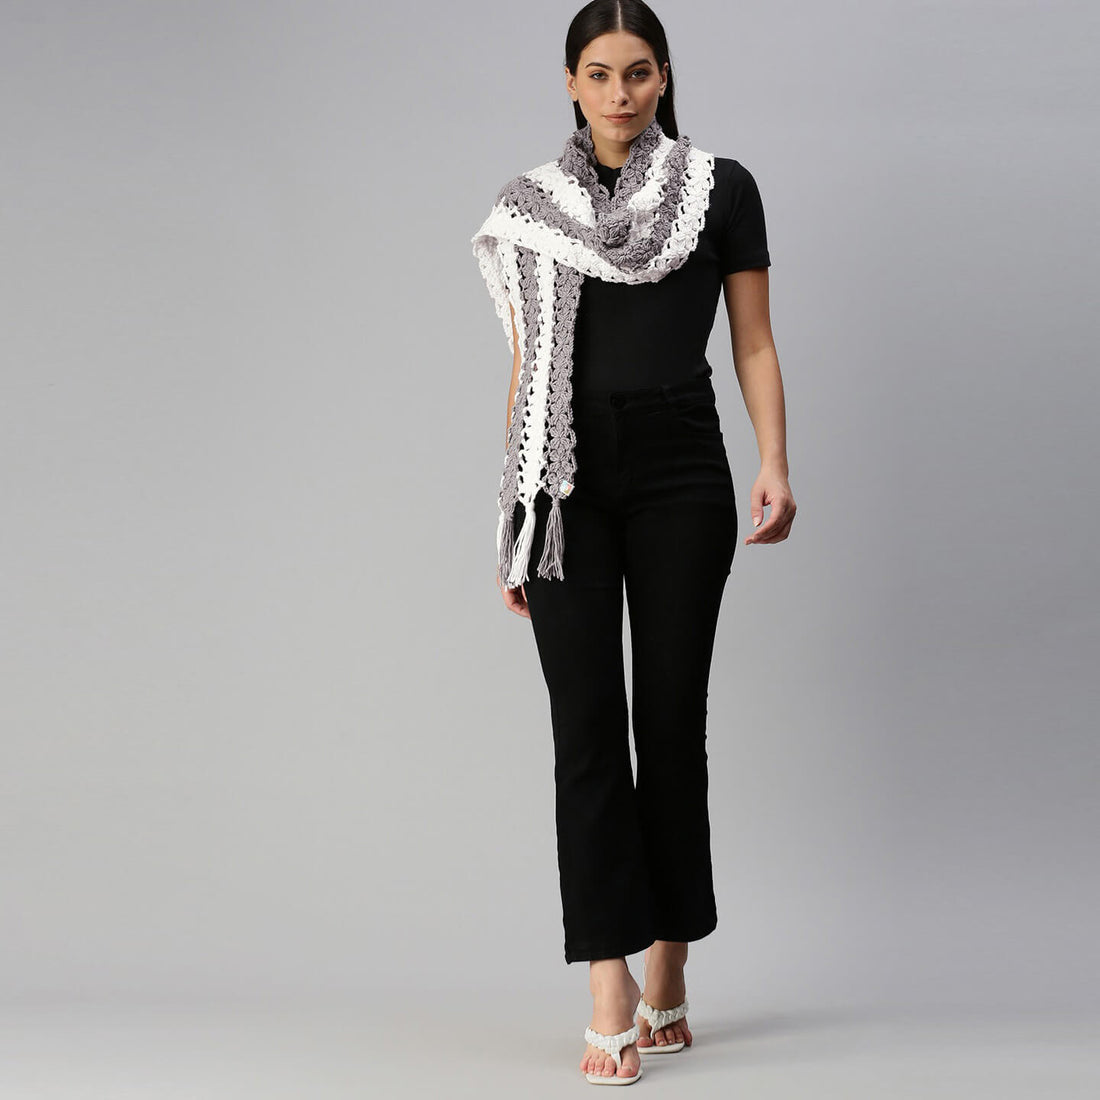 Flower Striped Crochet Scarf - Grey, White 2864